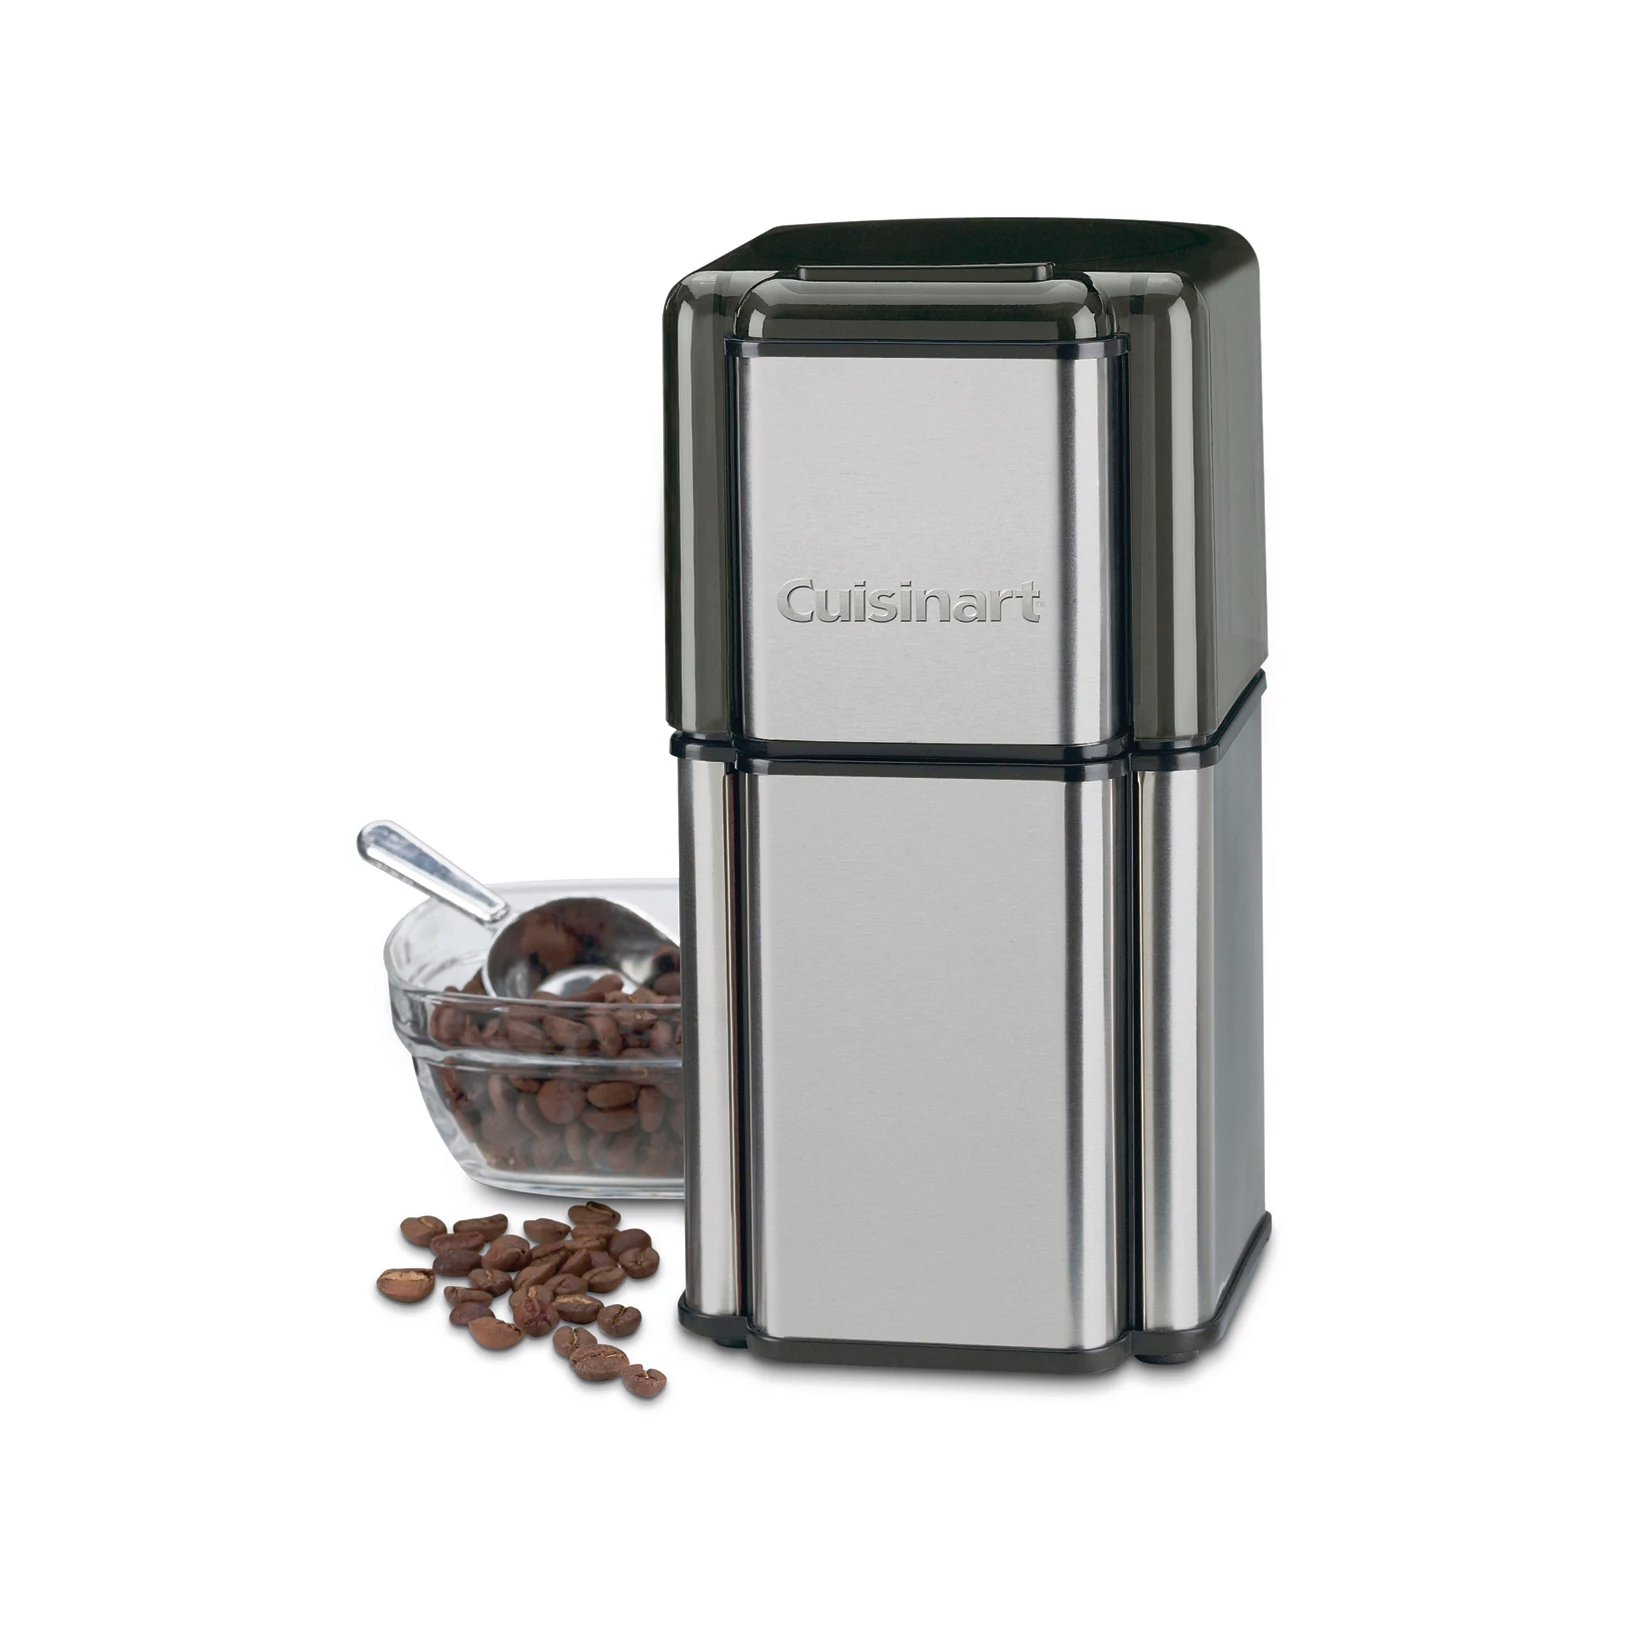 Cuisinart Grind Central Coffee Grinder - Brushed Chrome - DCG-12BCTG